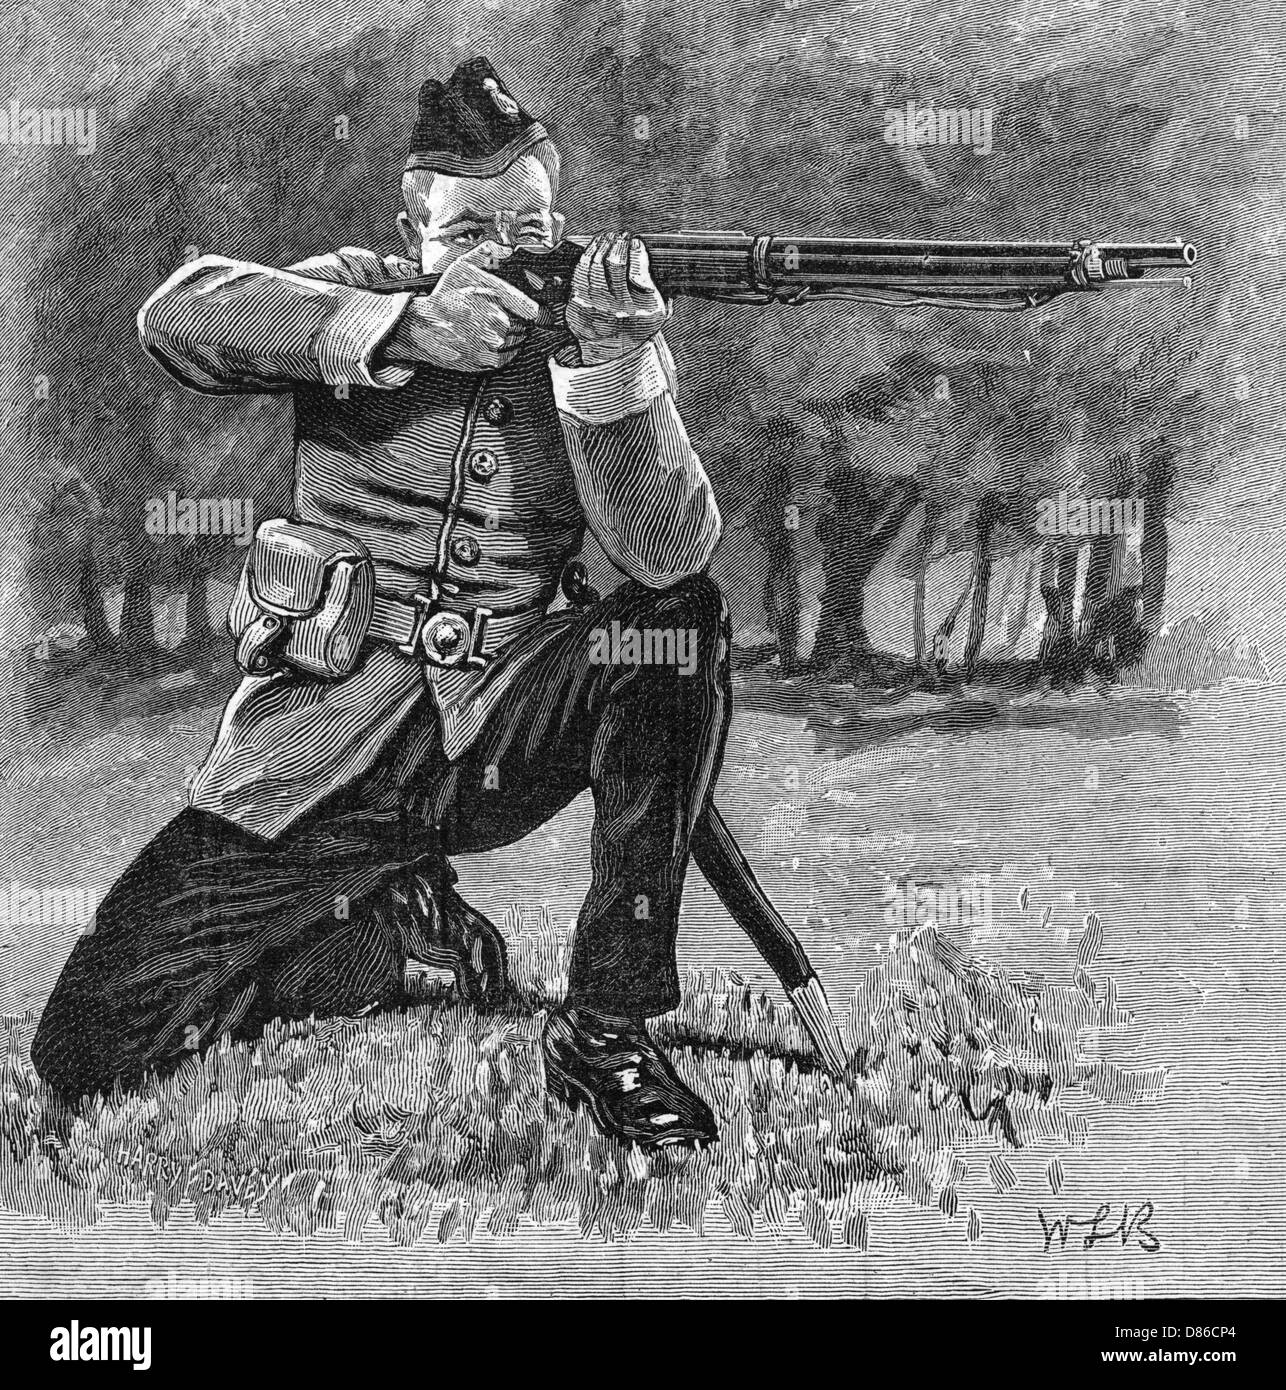 Rifle, kneeling position, 1892 Stock Photo